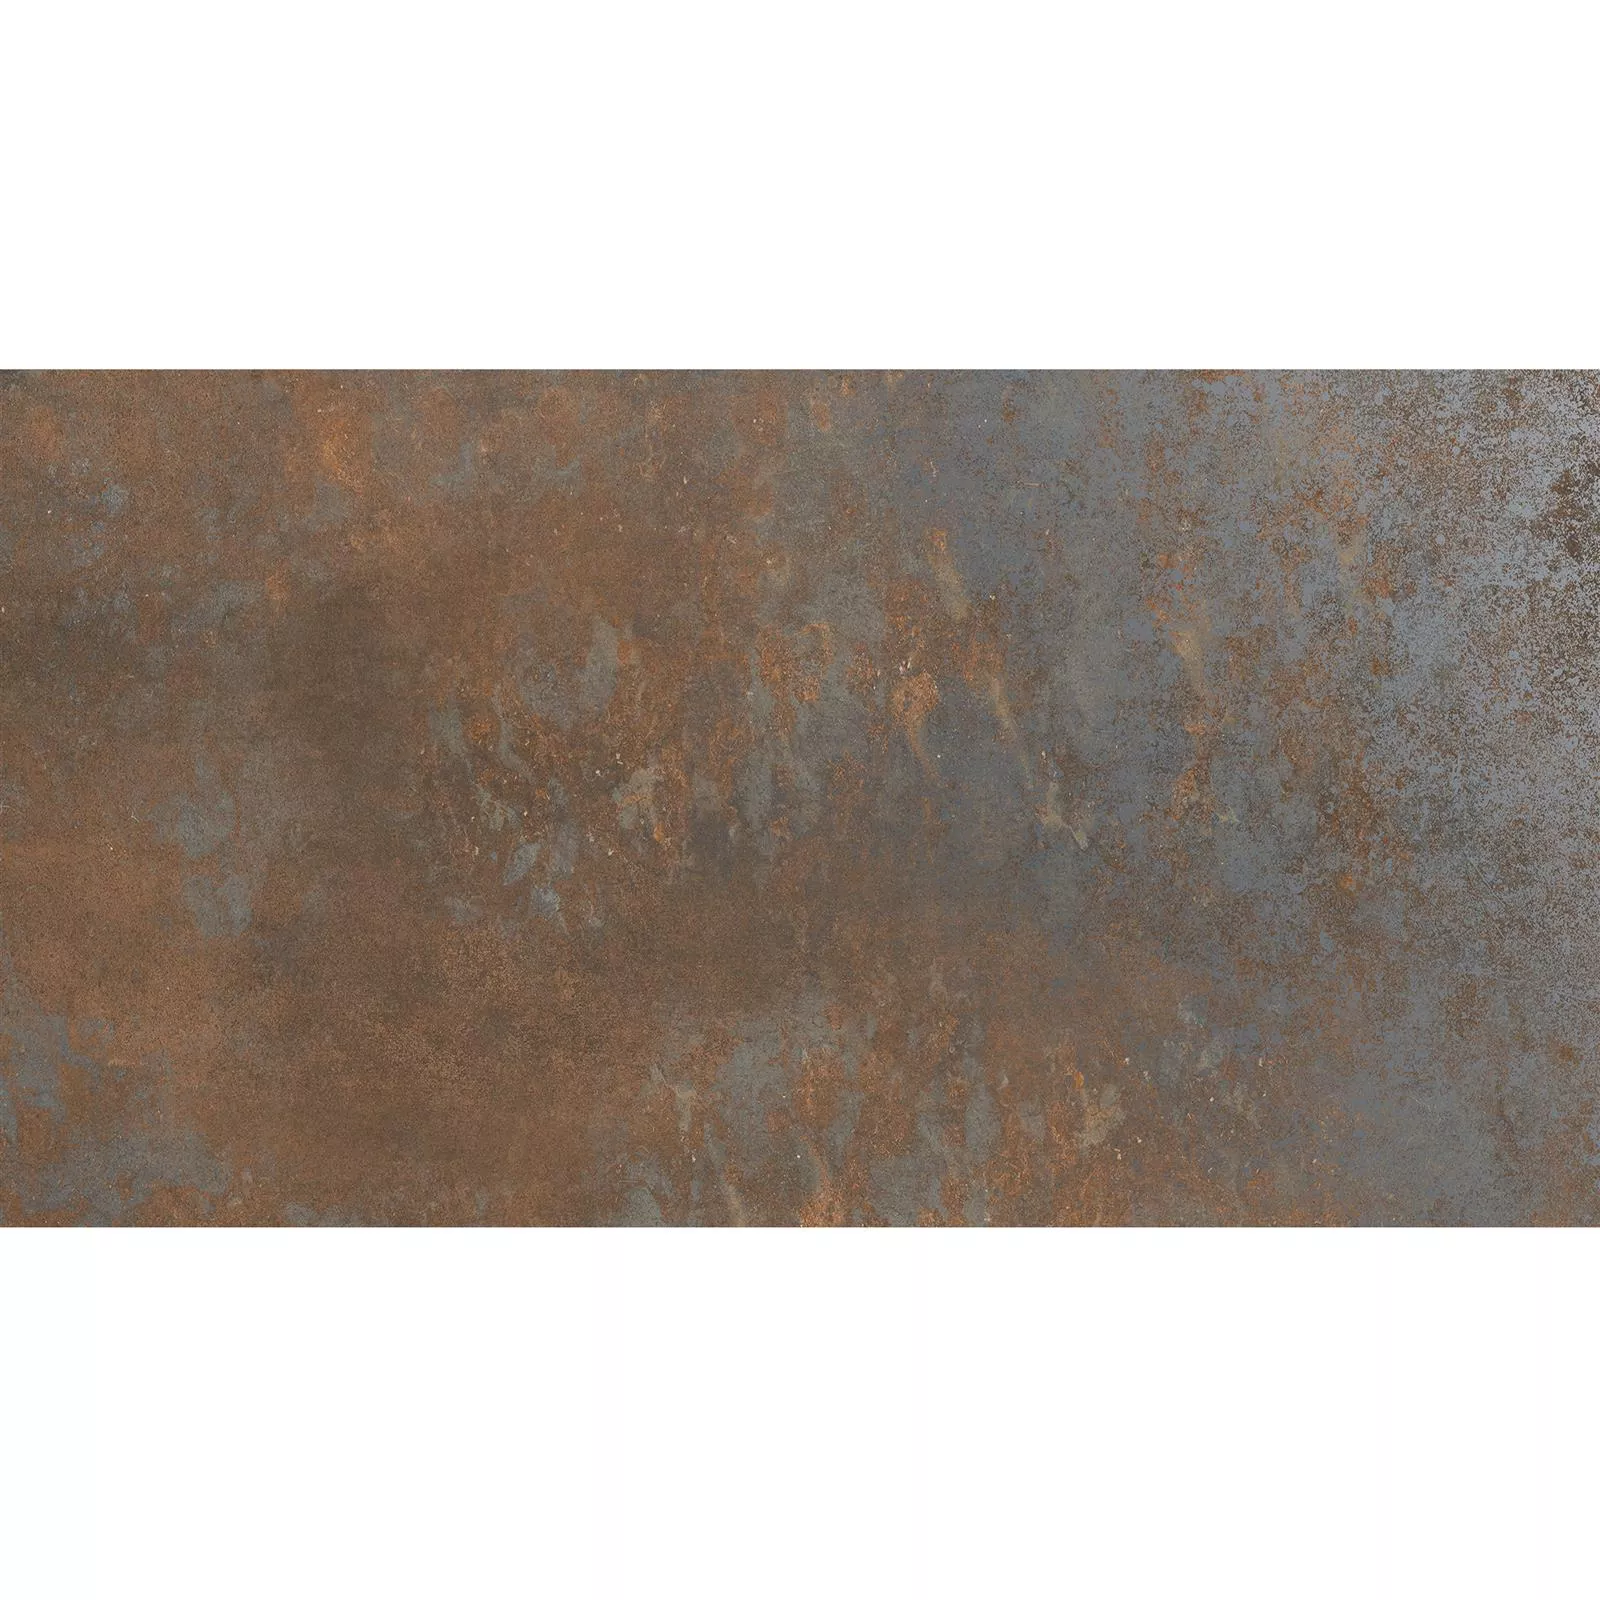 Campione Piastrelle Sierra Ottica Metallo Rust R10/B 30x60cm